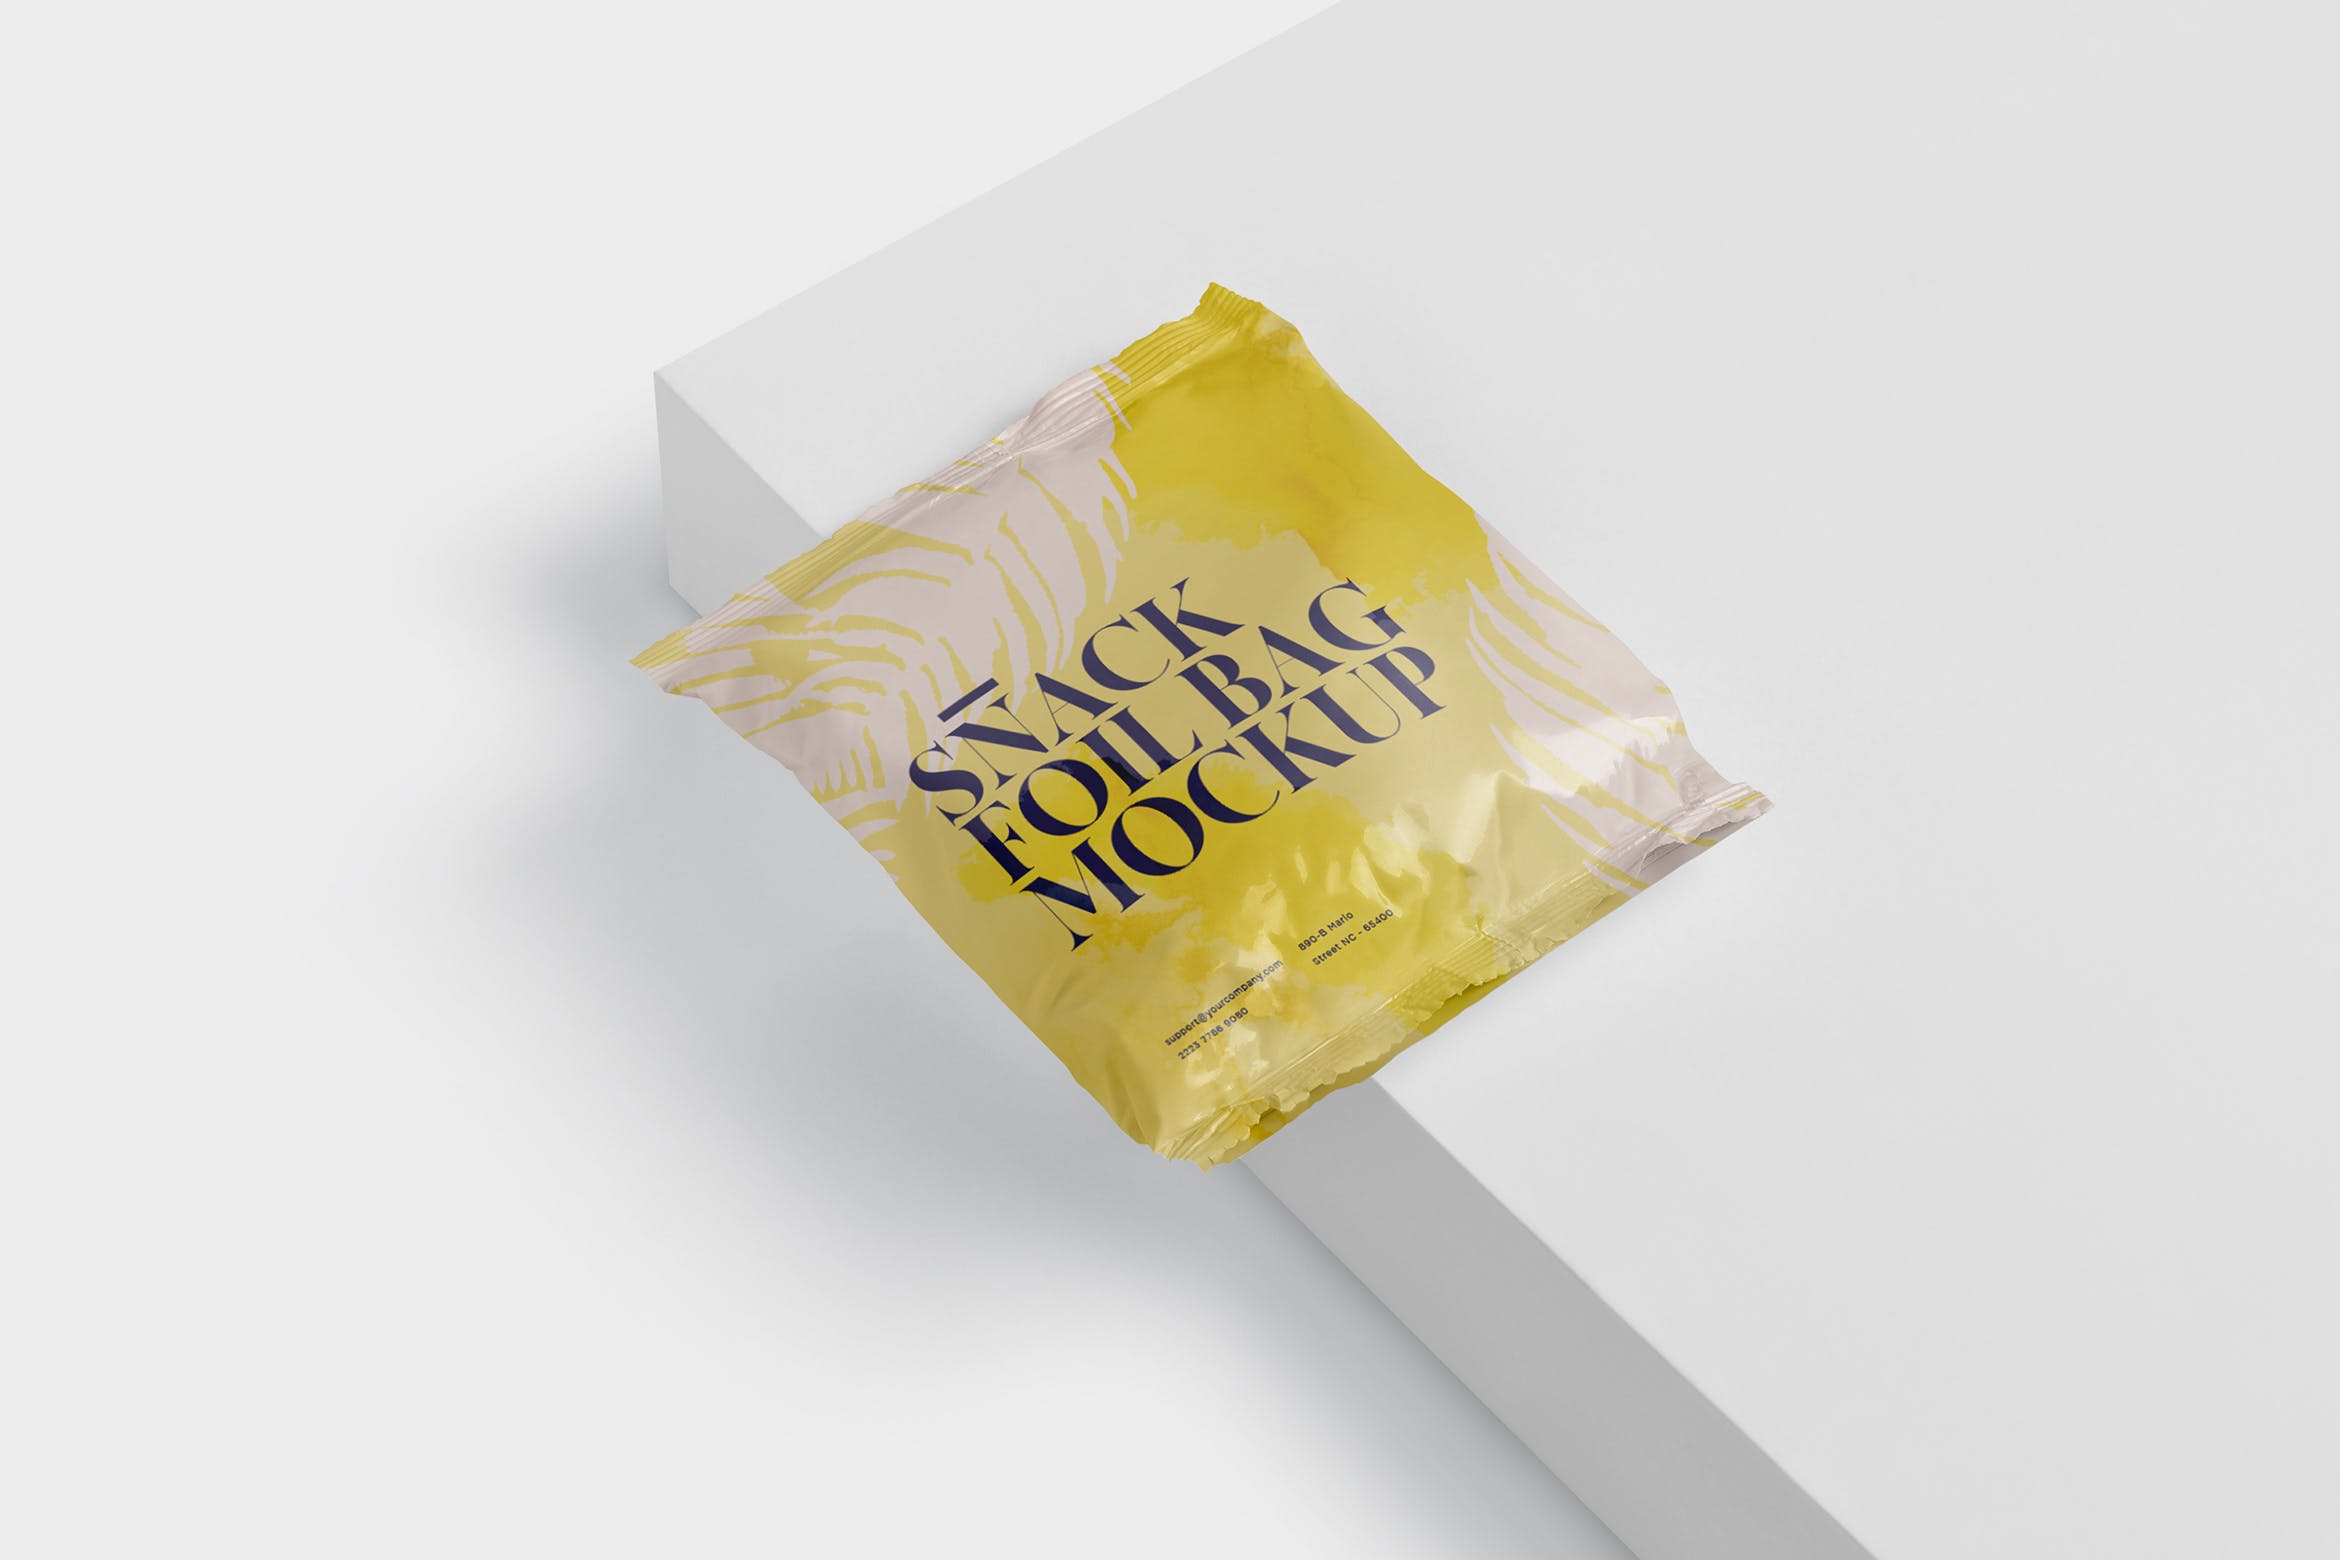 小吃零食铝箔包装袋设计图第一素材精选 Snack Foil Bag Mockup – Square Size – Small插图